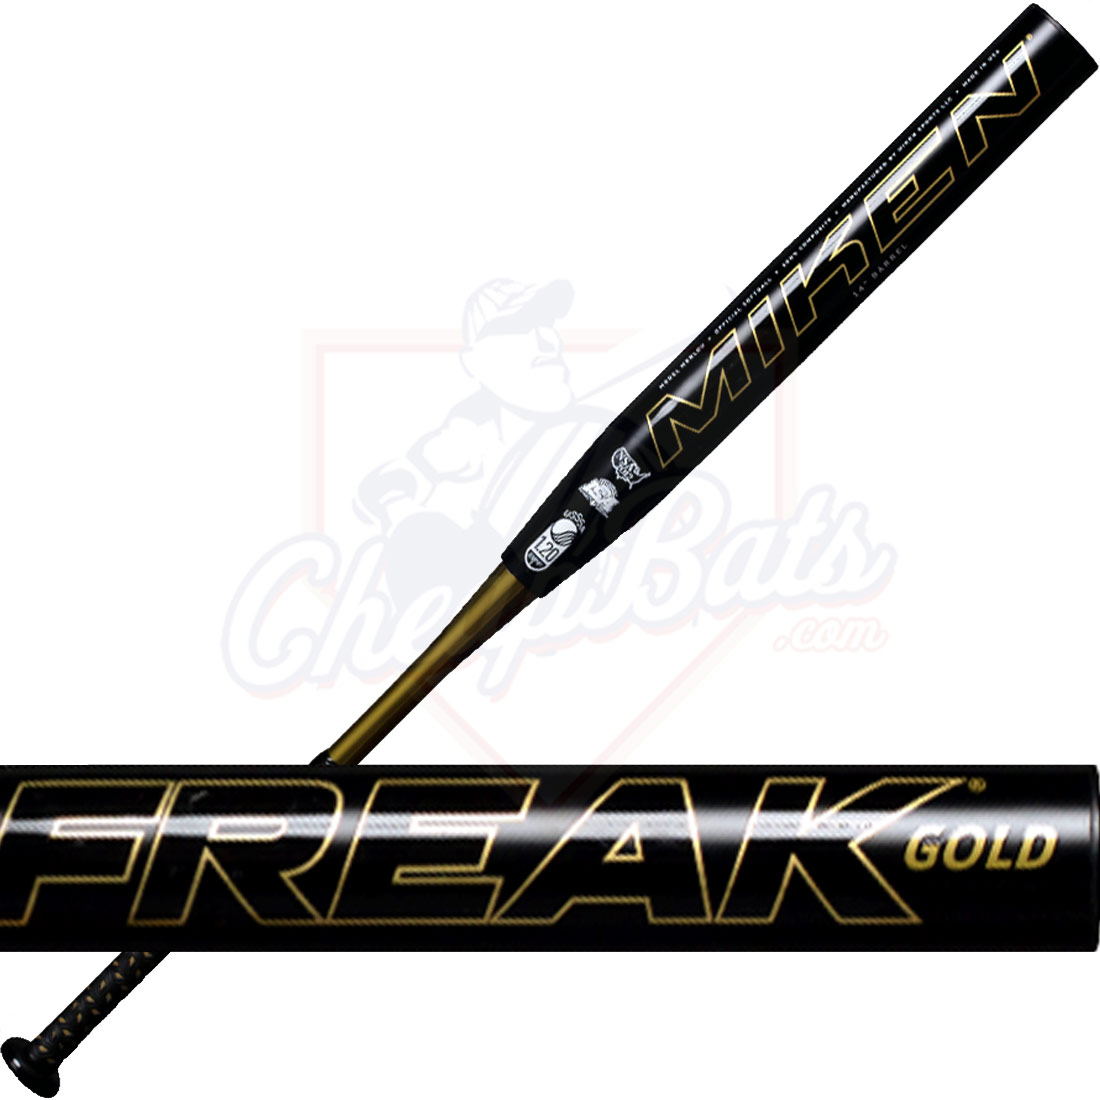 2020 Miken Freak Gold Limited Edition Slowpitch Softball Bat Maxload USSSA MGOLDU